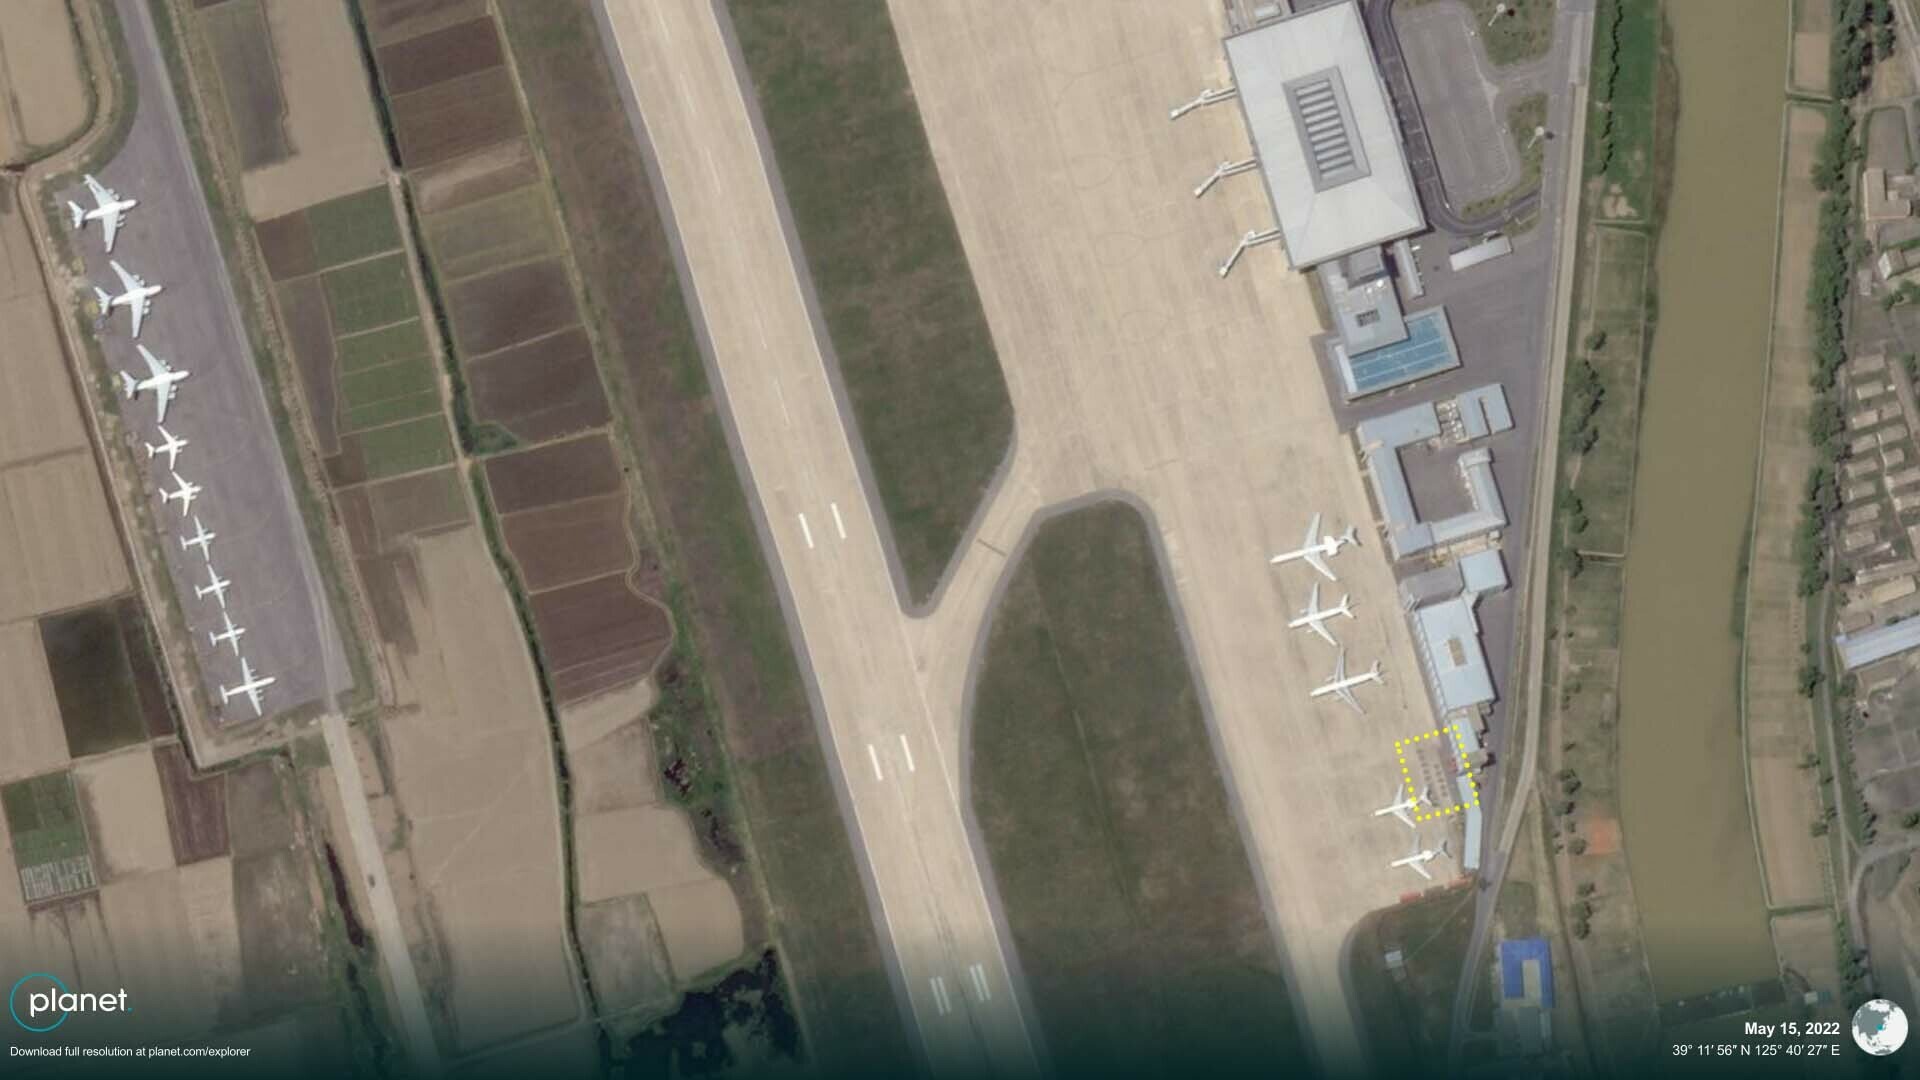 planet-may15-skysat-pyongyang-airport-crates-equipment-moved.jpg